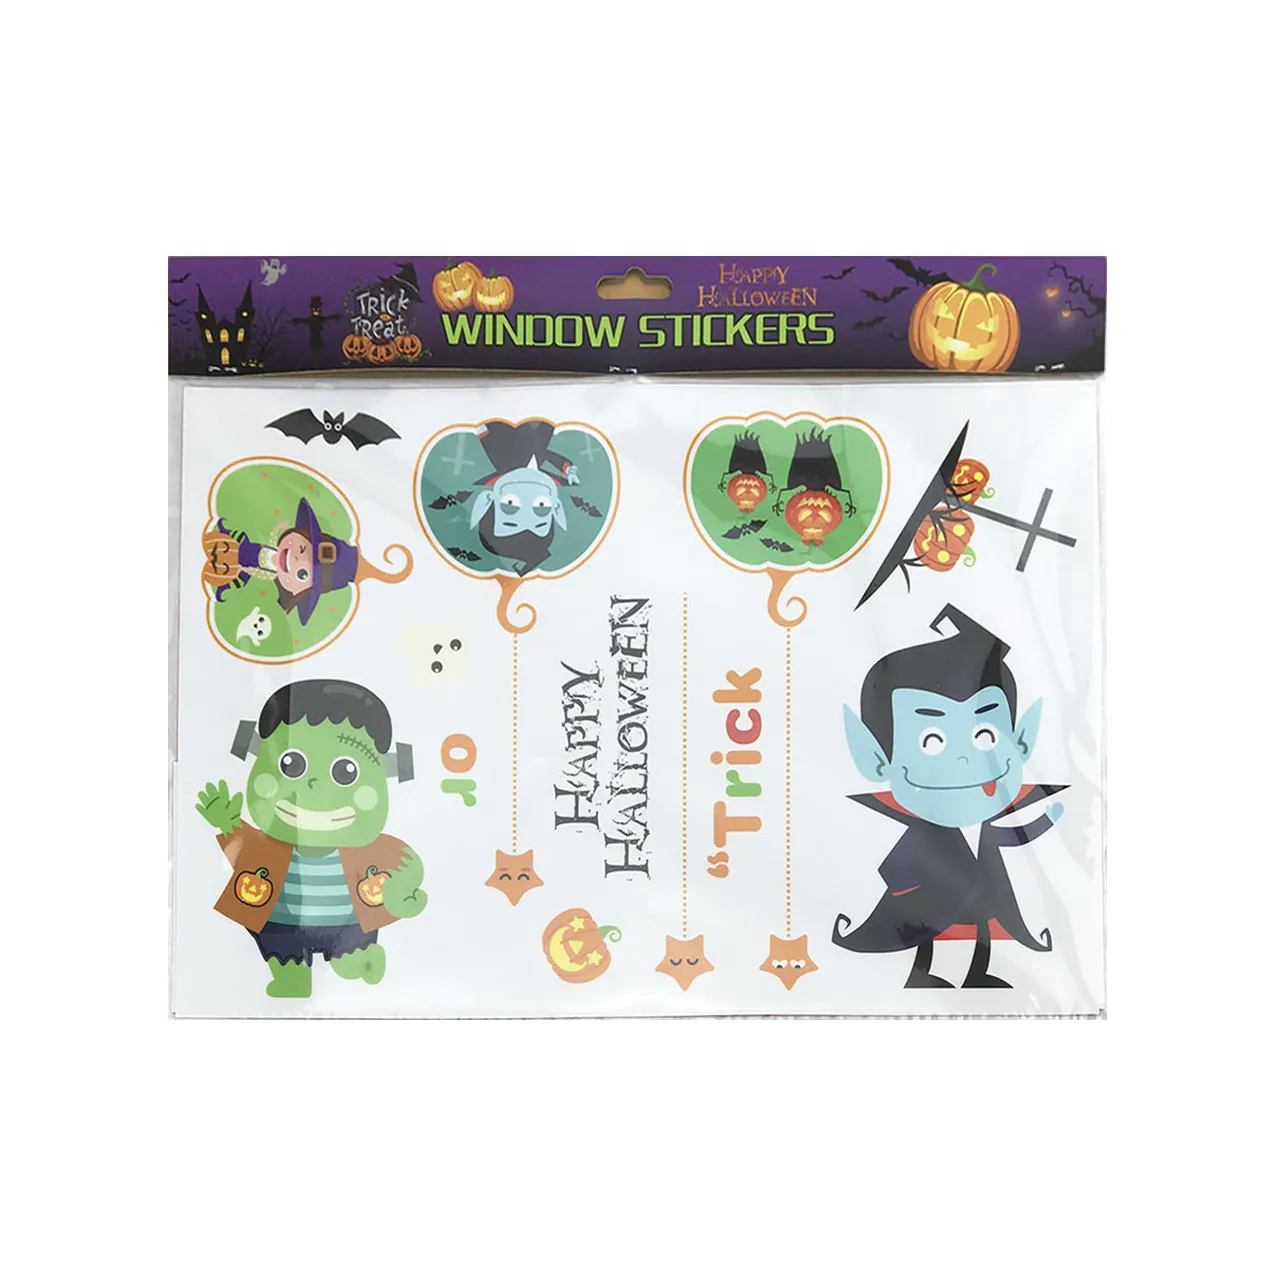 Halloween Party PVC Bat Pumpkin Decal Wall Sticker Halloween Home Window For Children And Holidays